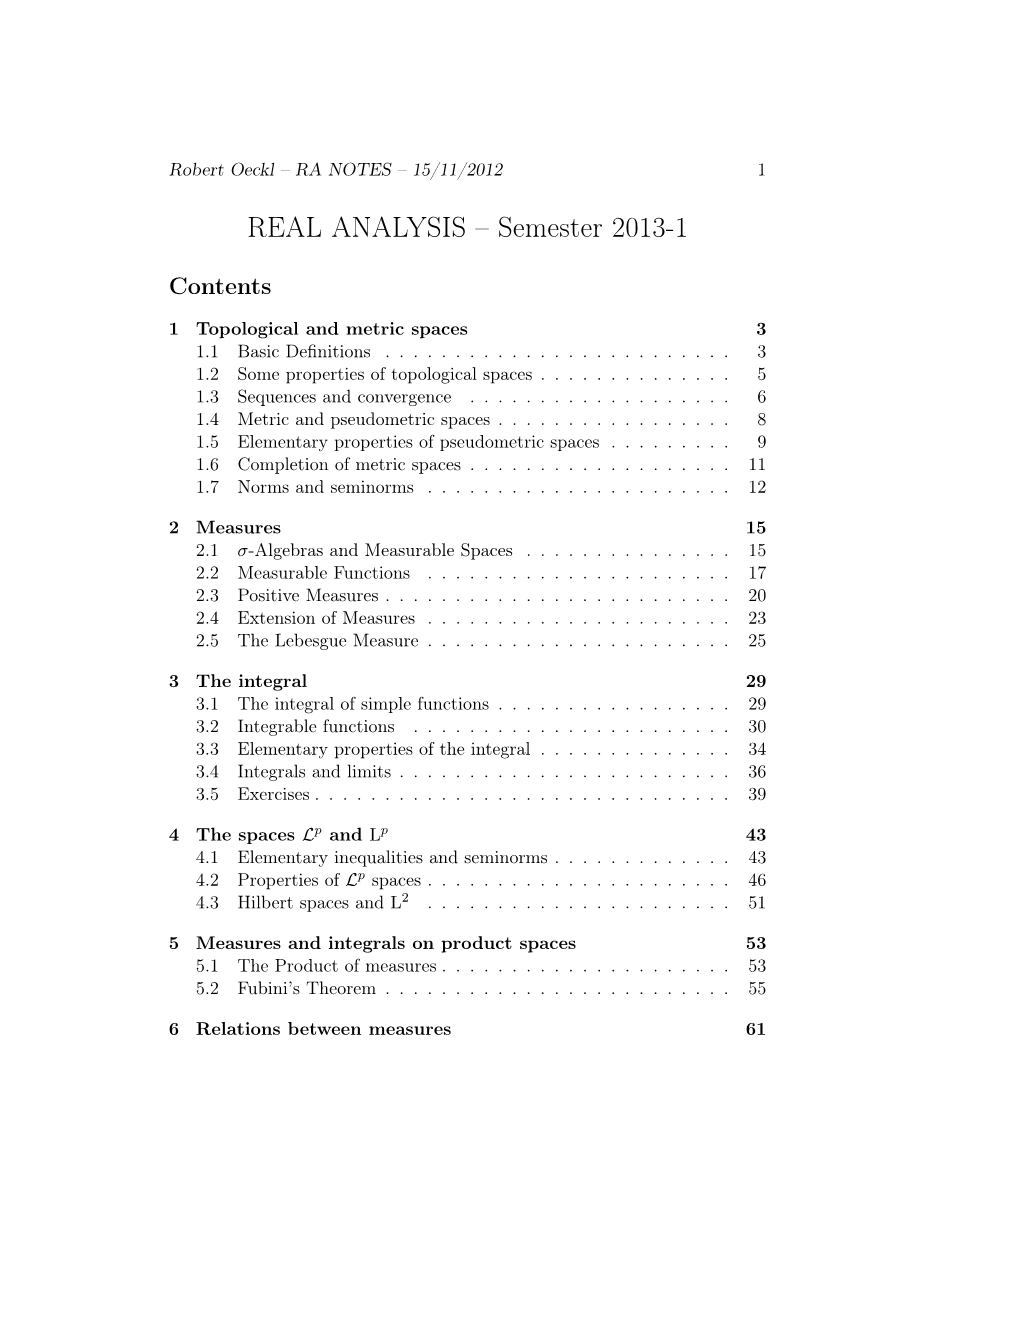 REAL ANALYSIS – Semester 2013-1